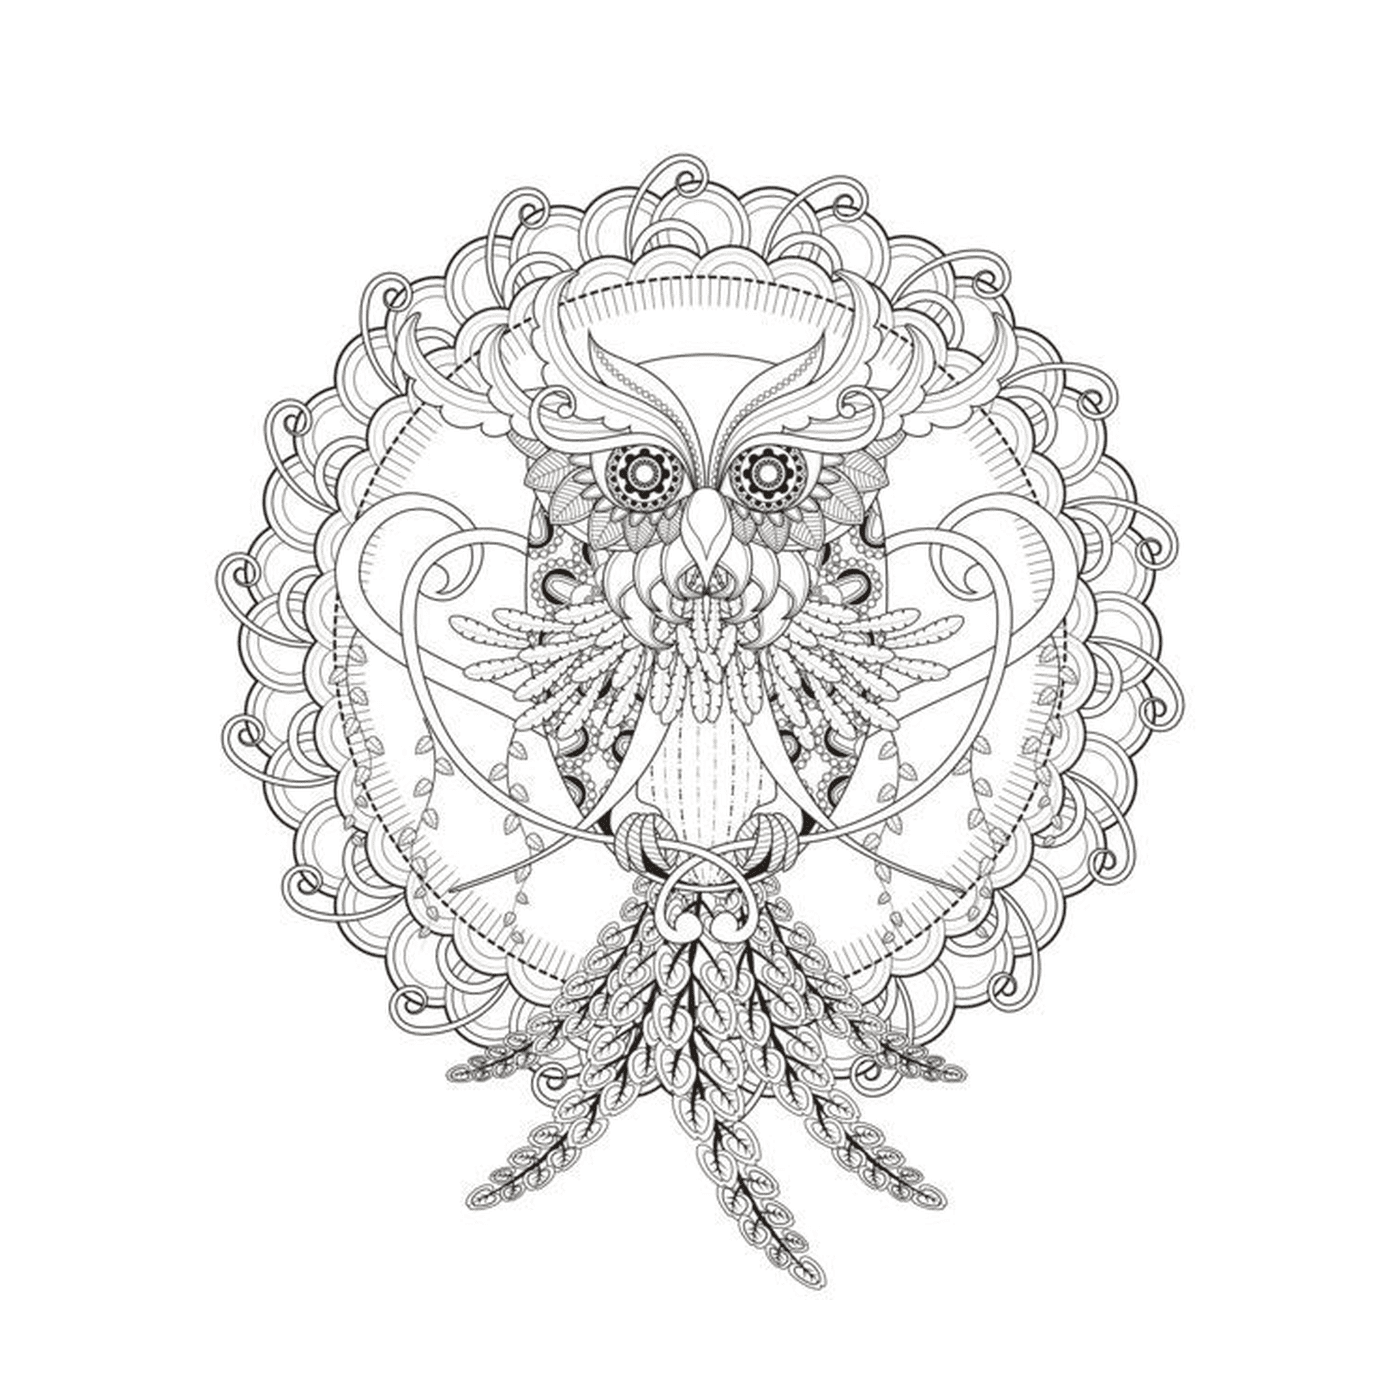  A detailed owl in a mandala 